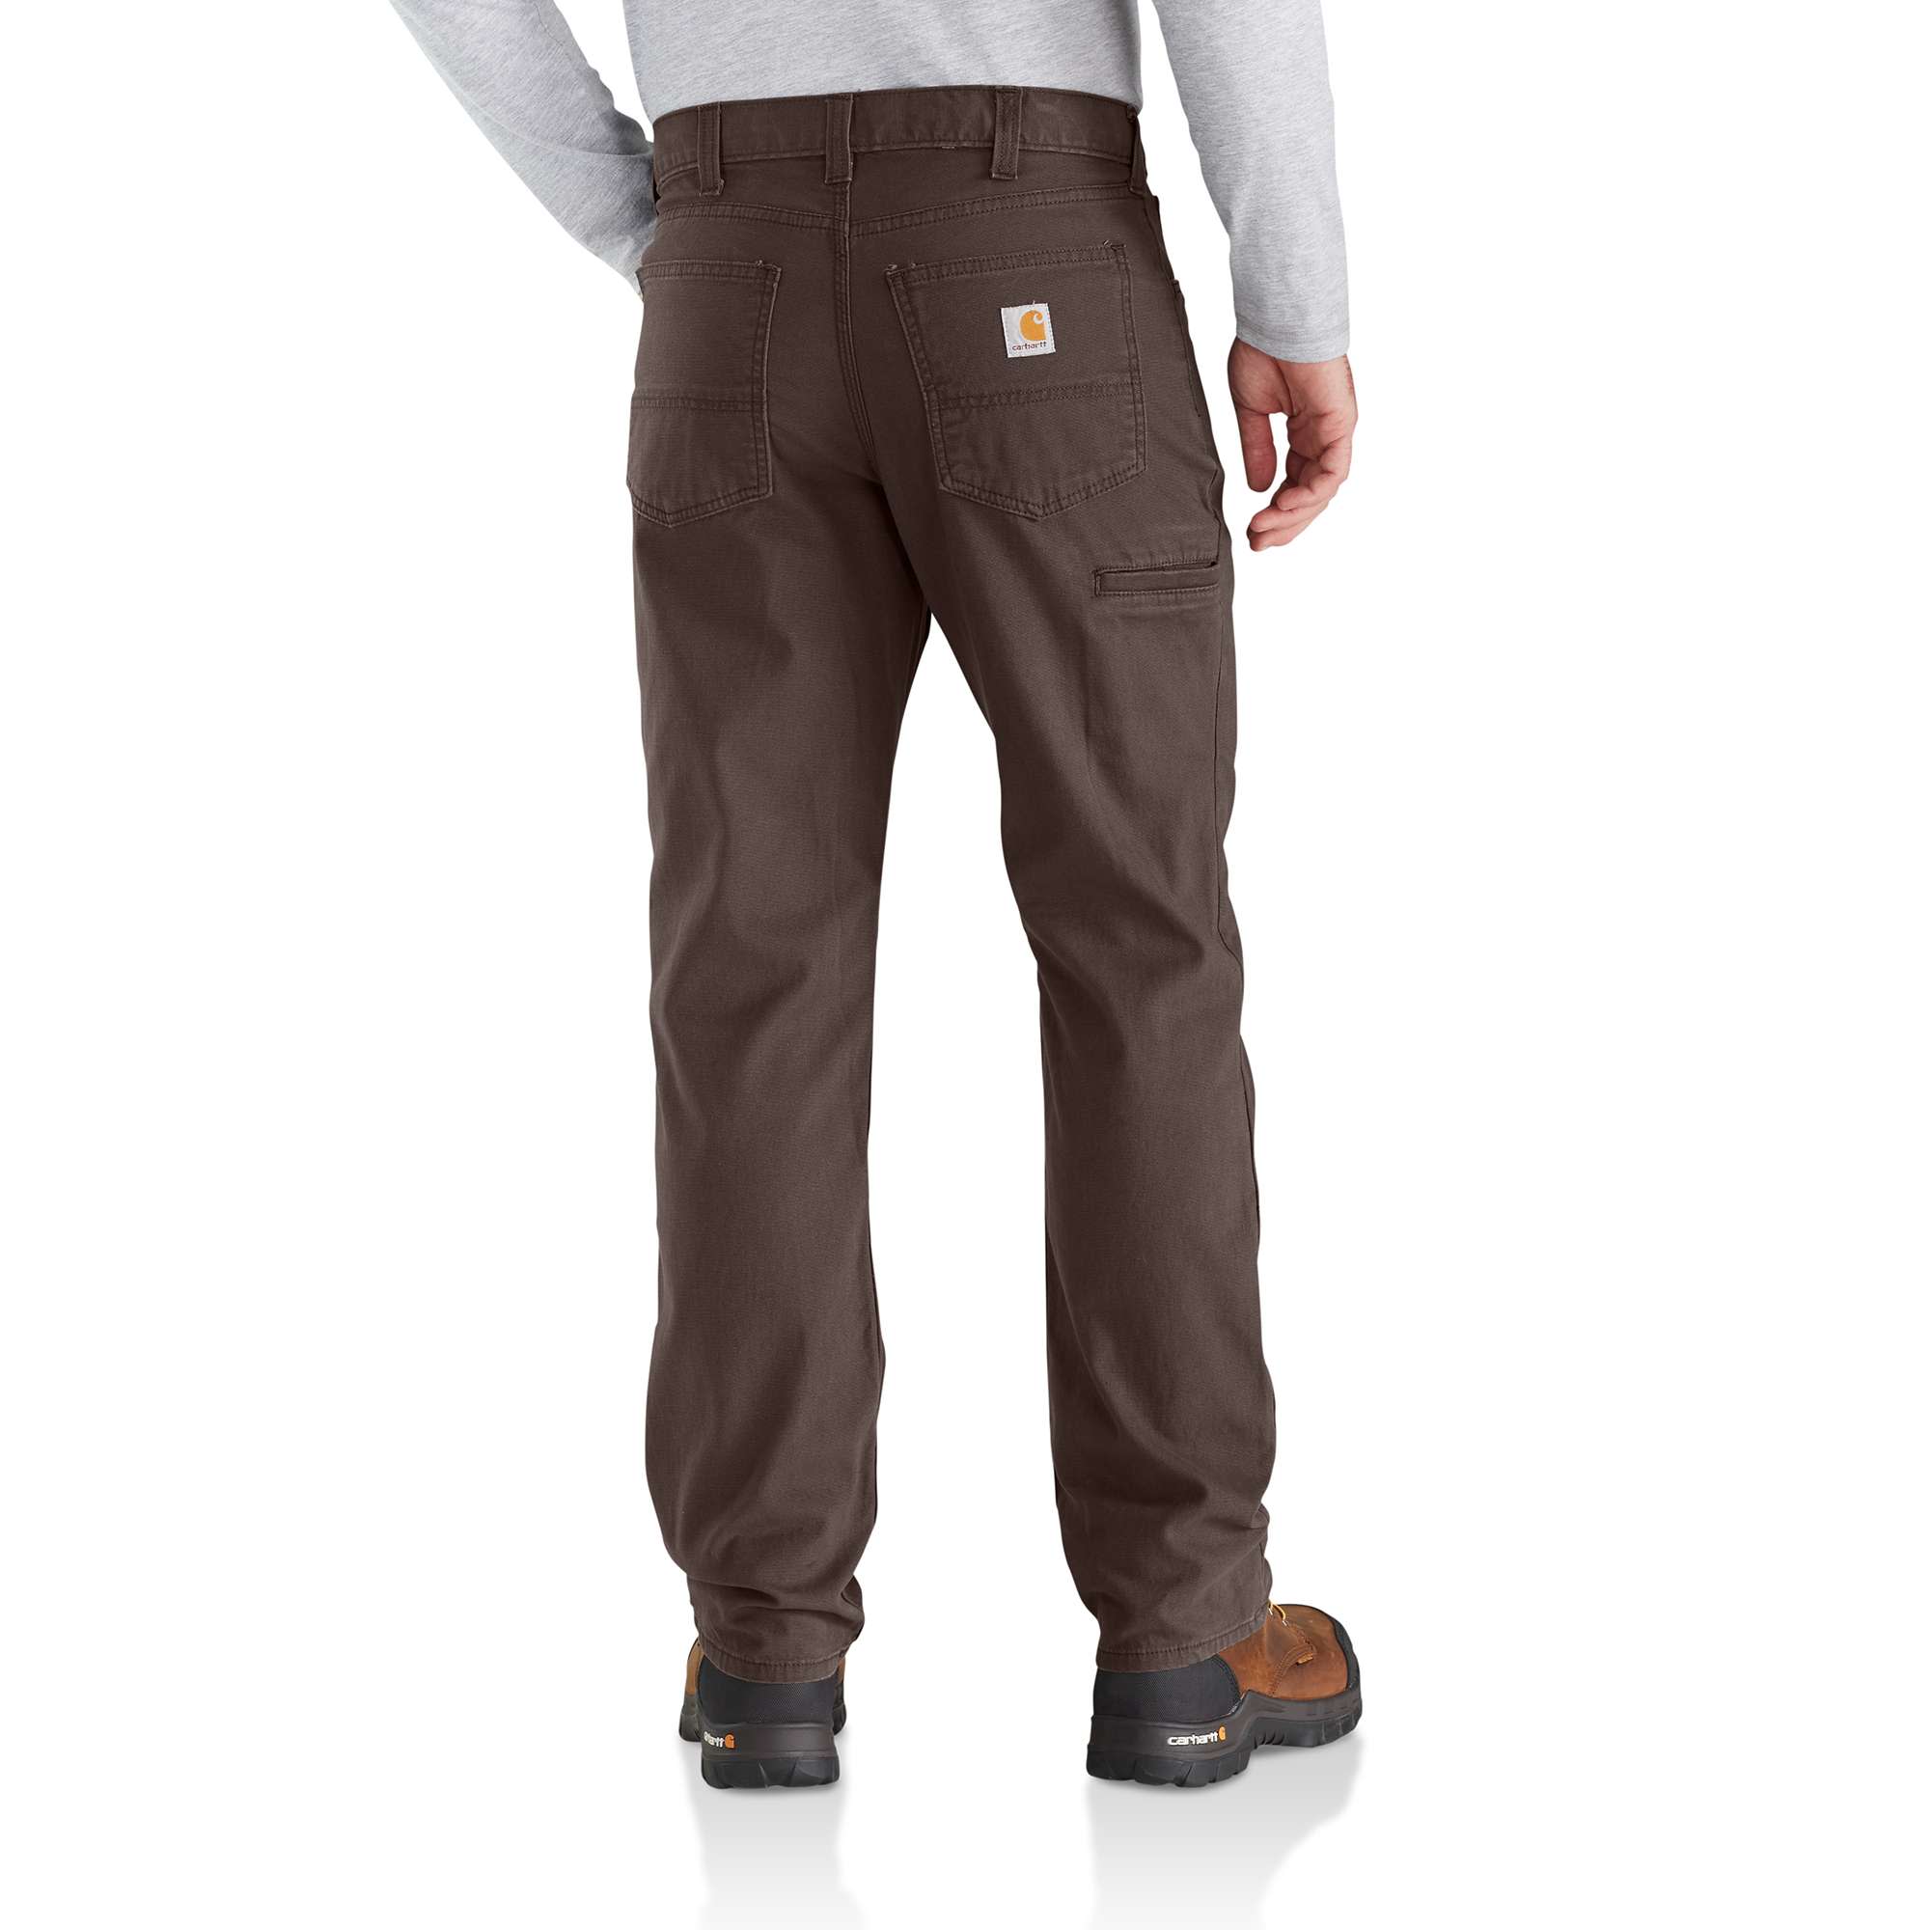 Carhartt Men's Relaxed Fit Twill Utility Work Pants - B324-BLK-30x30 |  Blain's Farm & Fleet